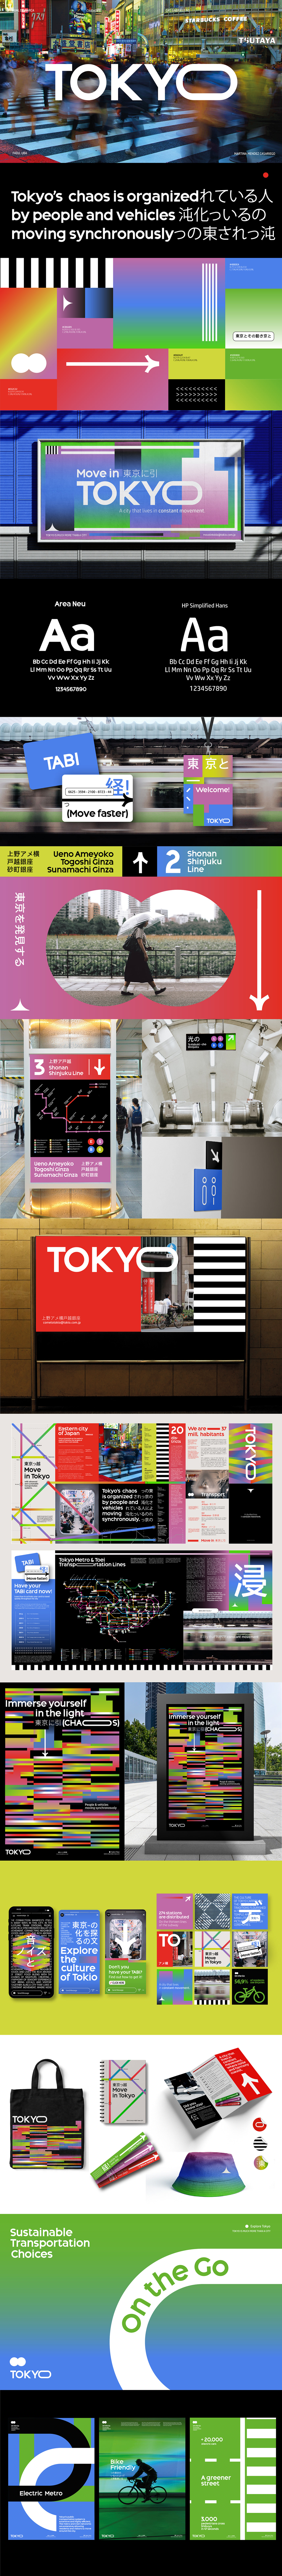 brand identity branding  City branding tokyo Manual de Identidad japan ciudad identidad visual visual identity marca